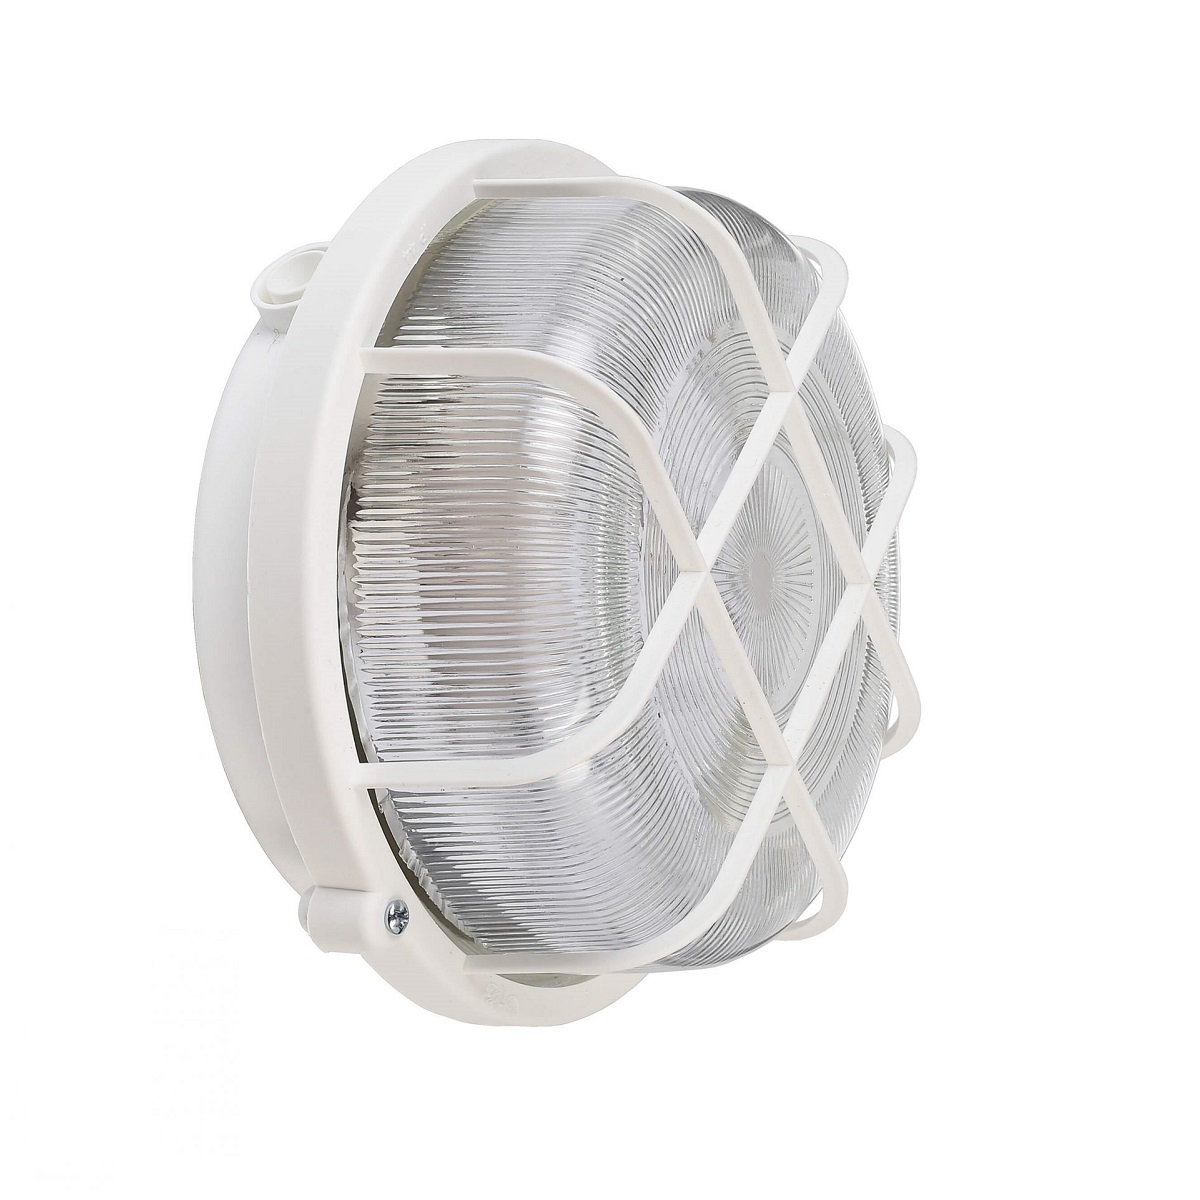 

Уличный настенный светильник Deko-Light Syrma Round White 401014, Белый, 401014 Syrma Round